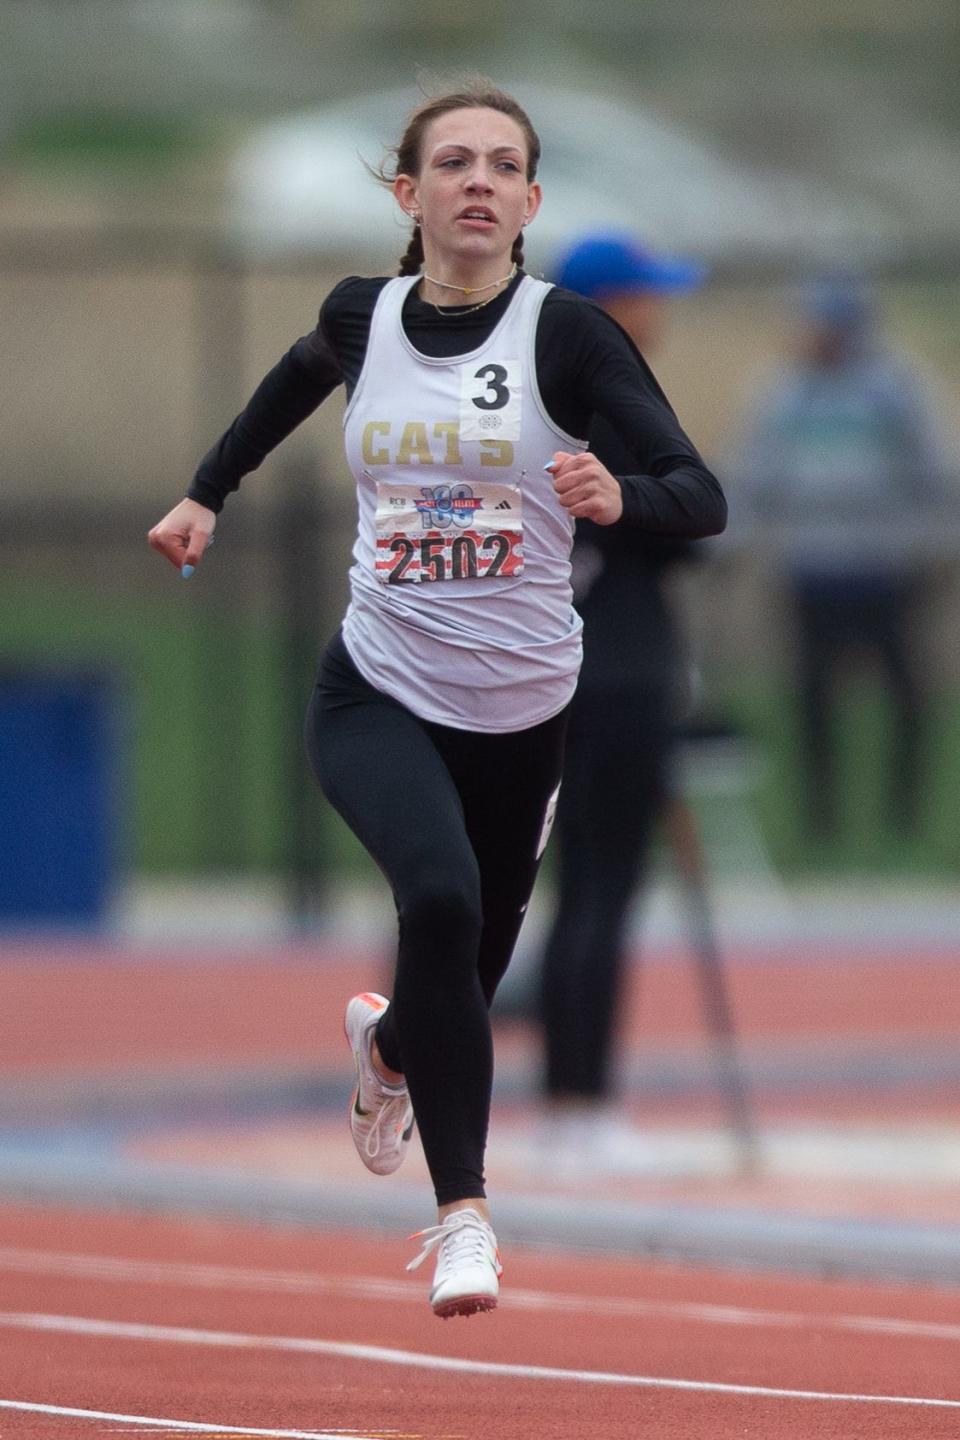 Hayden Natalie Hillebert races in the girls 400 meter at last year's Kansas Relays Saturday at Rock Chalk Park.